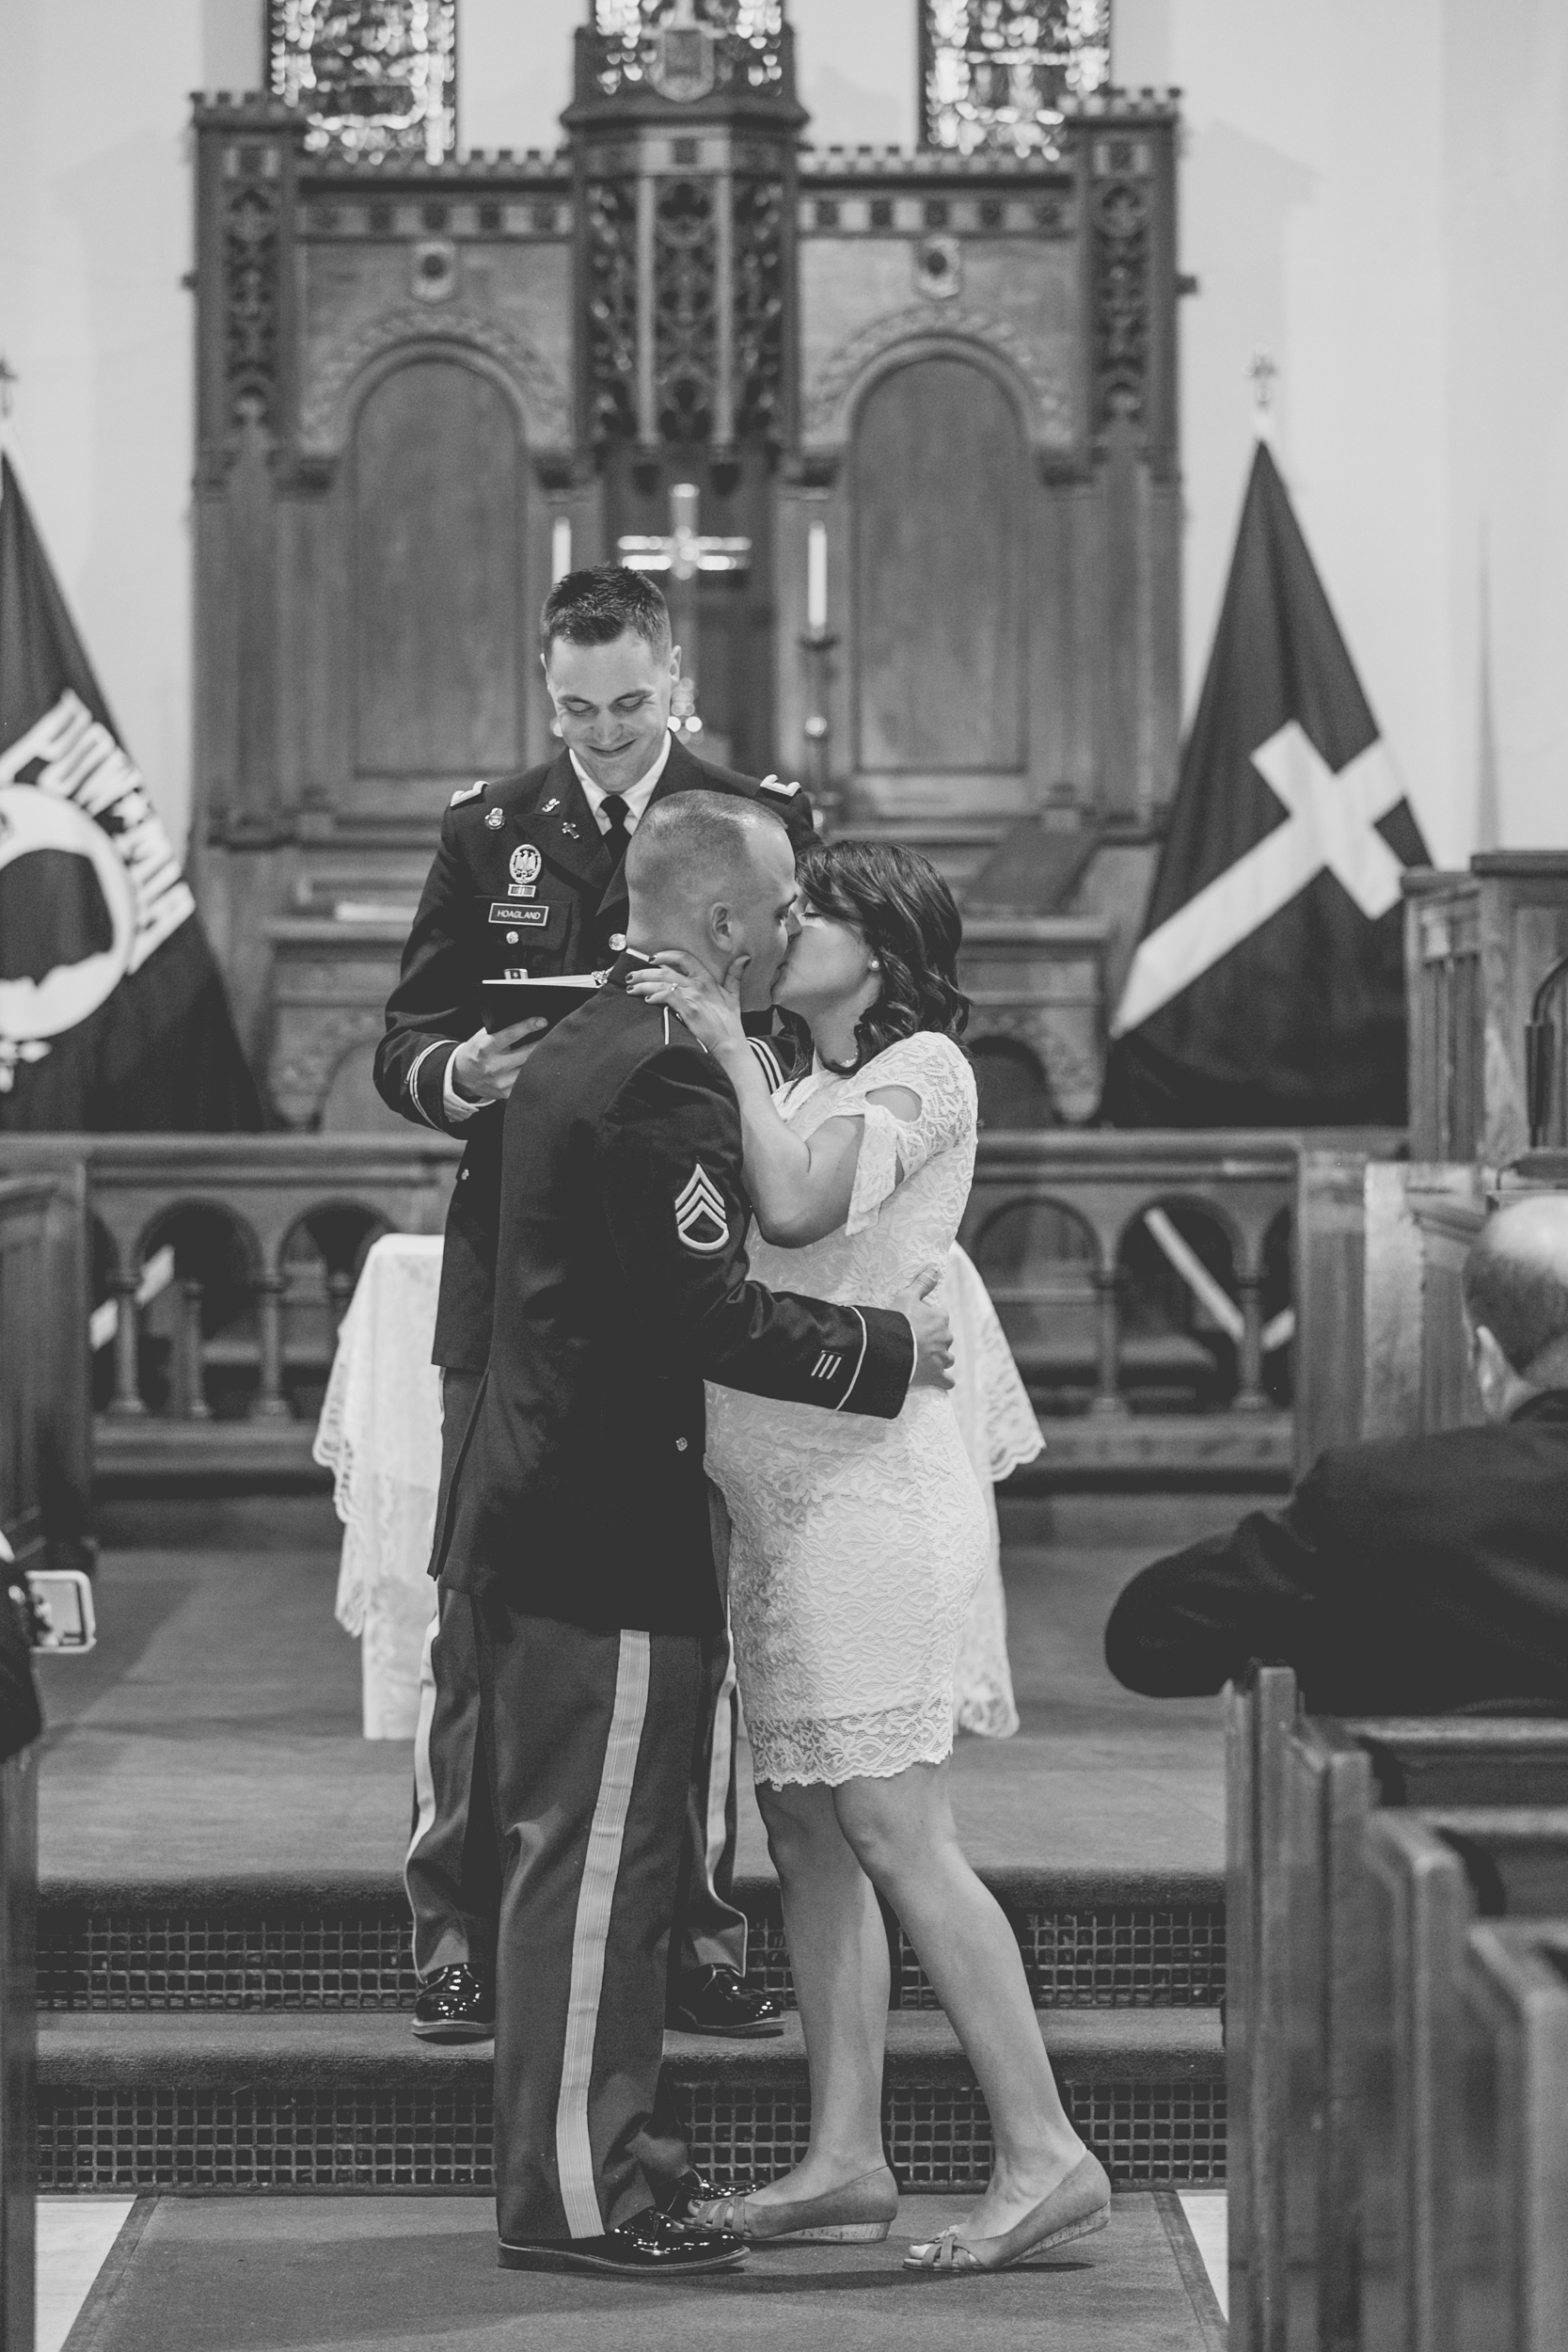 Fort Snelling Elopement St. Paul, MN, Fort Snelling Elopement, Military Elopement, Intimate Military Wedding, intimate elopement wedding-www.rachelsmak.com31.jpg